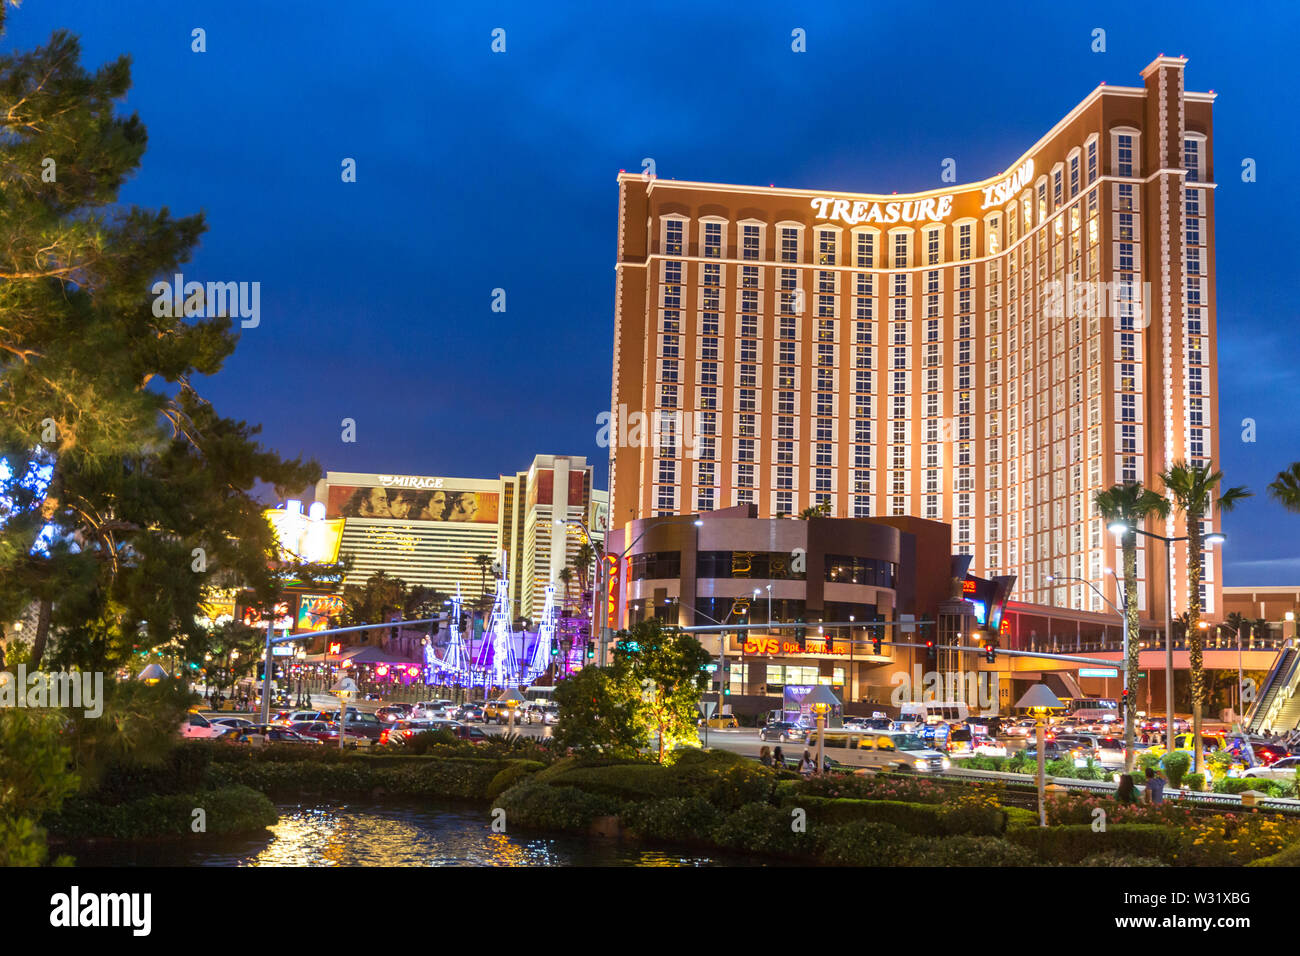 Las Vegas May 29 2015 Treasure Island Hotel And Casino